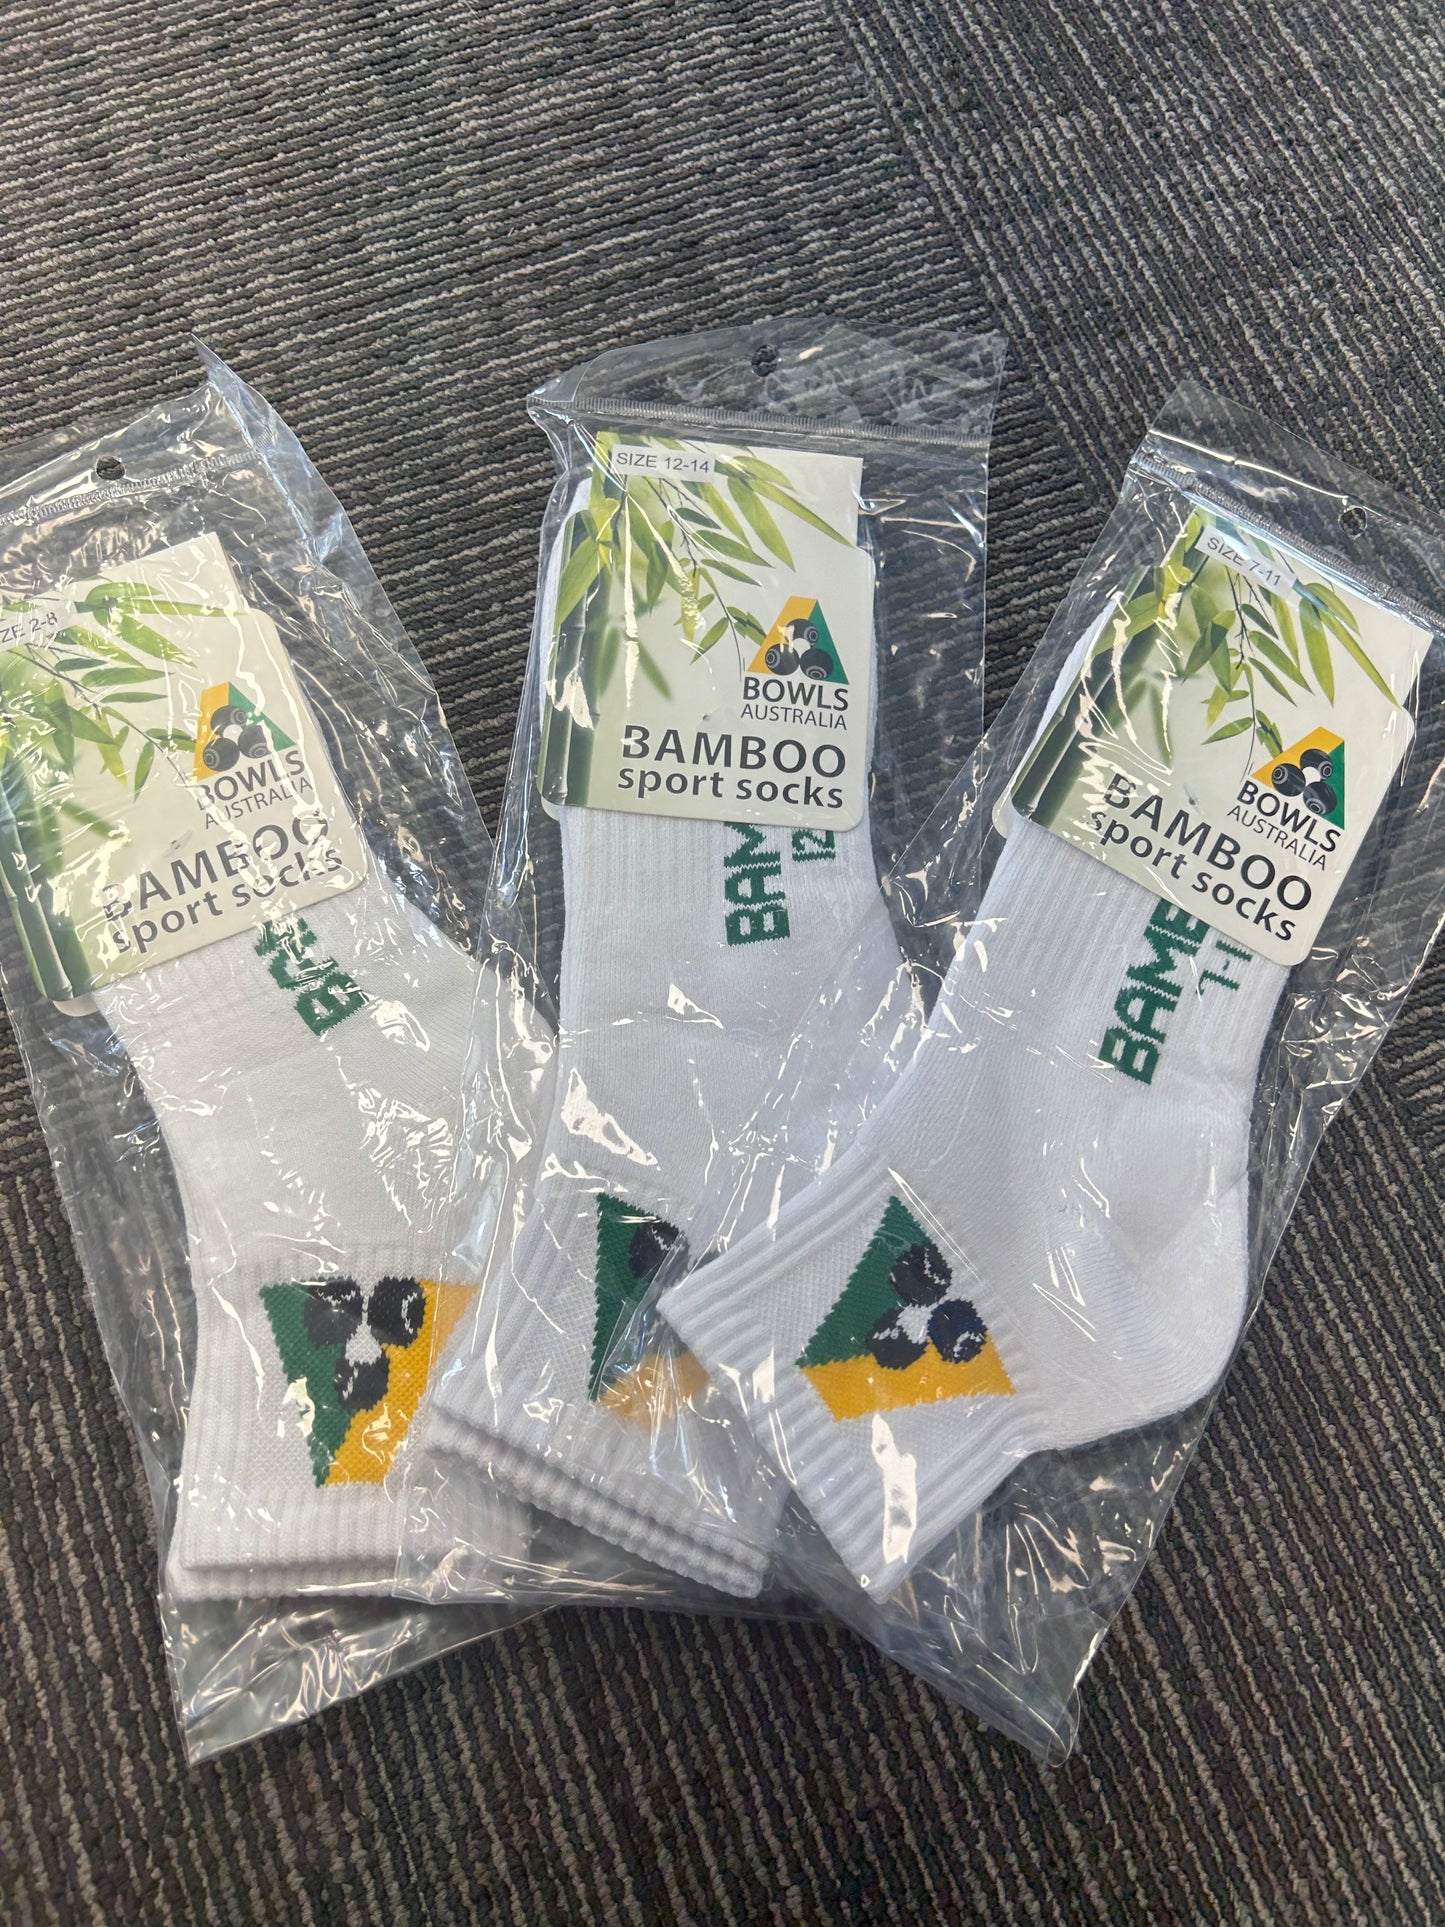 Bowls Australia Bamboo Sport Socks